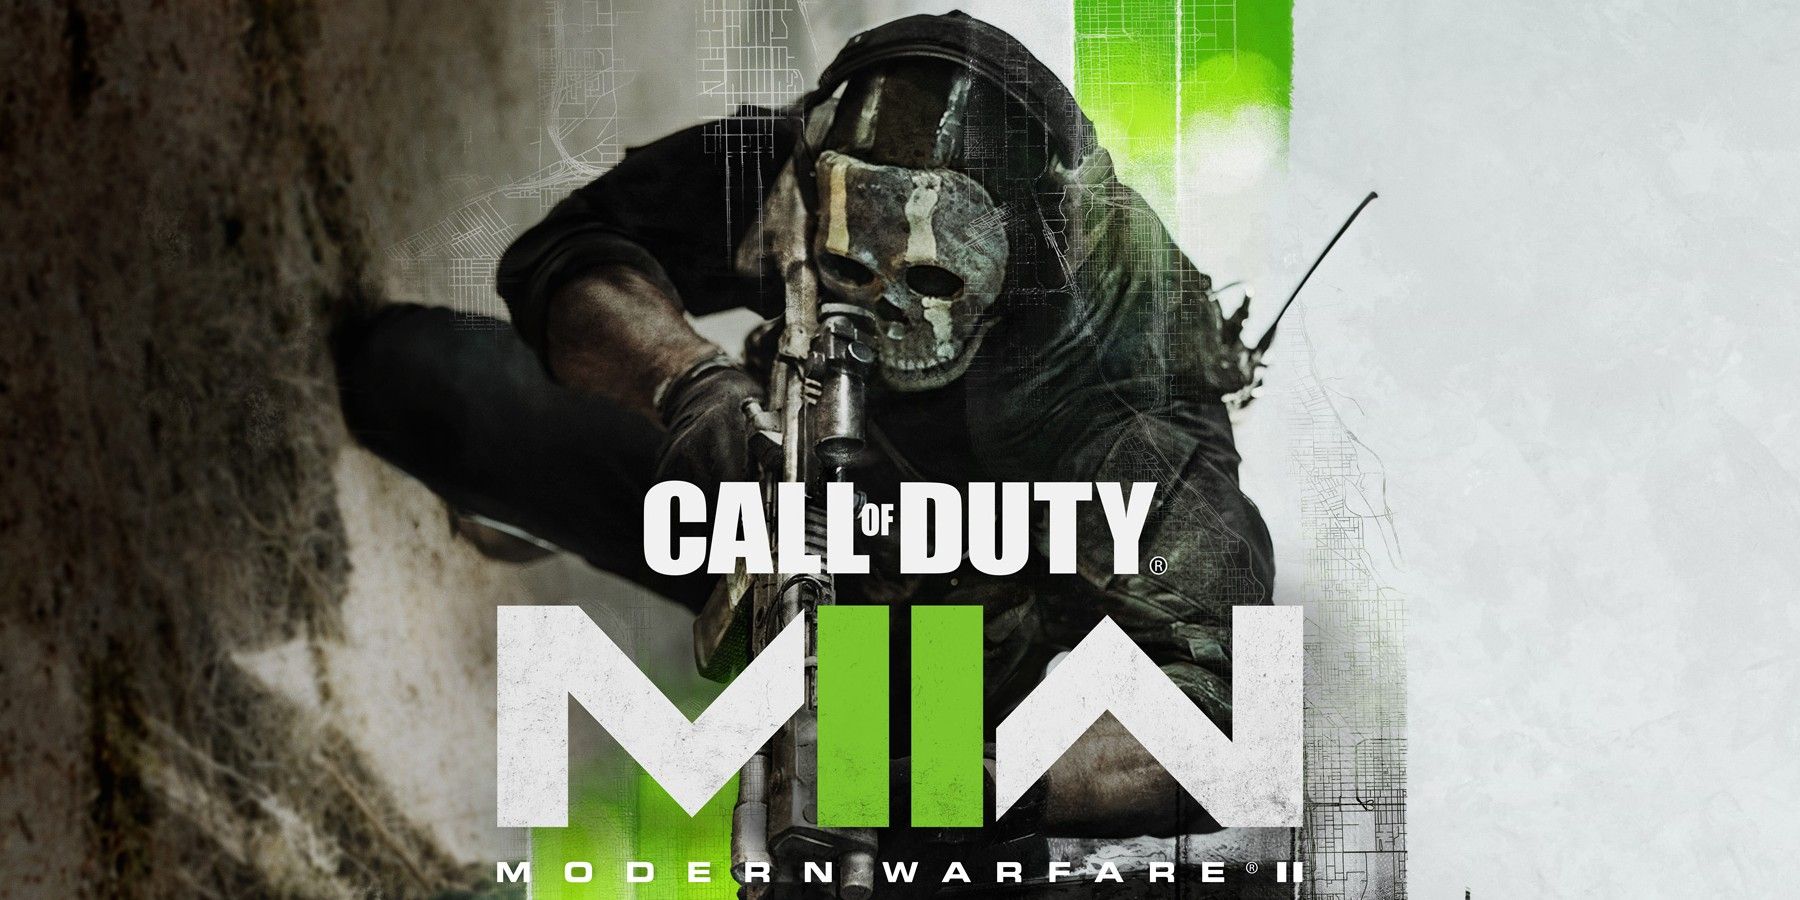 титульный экран Call of Duty Modern Warfare 2